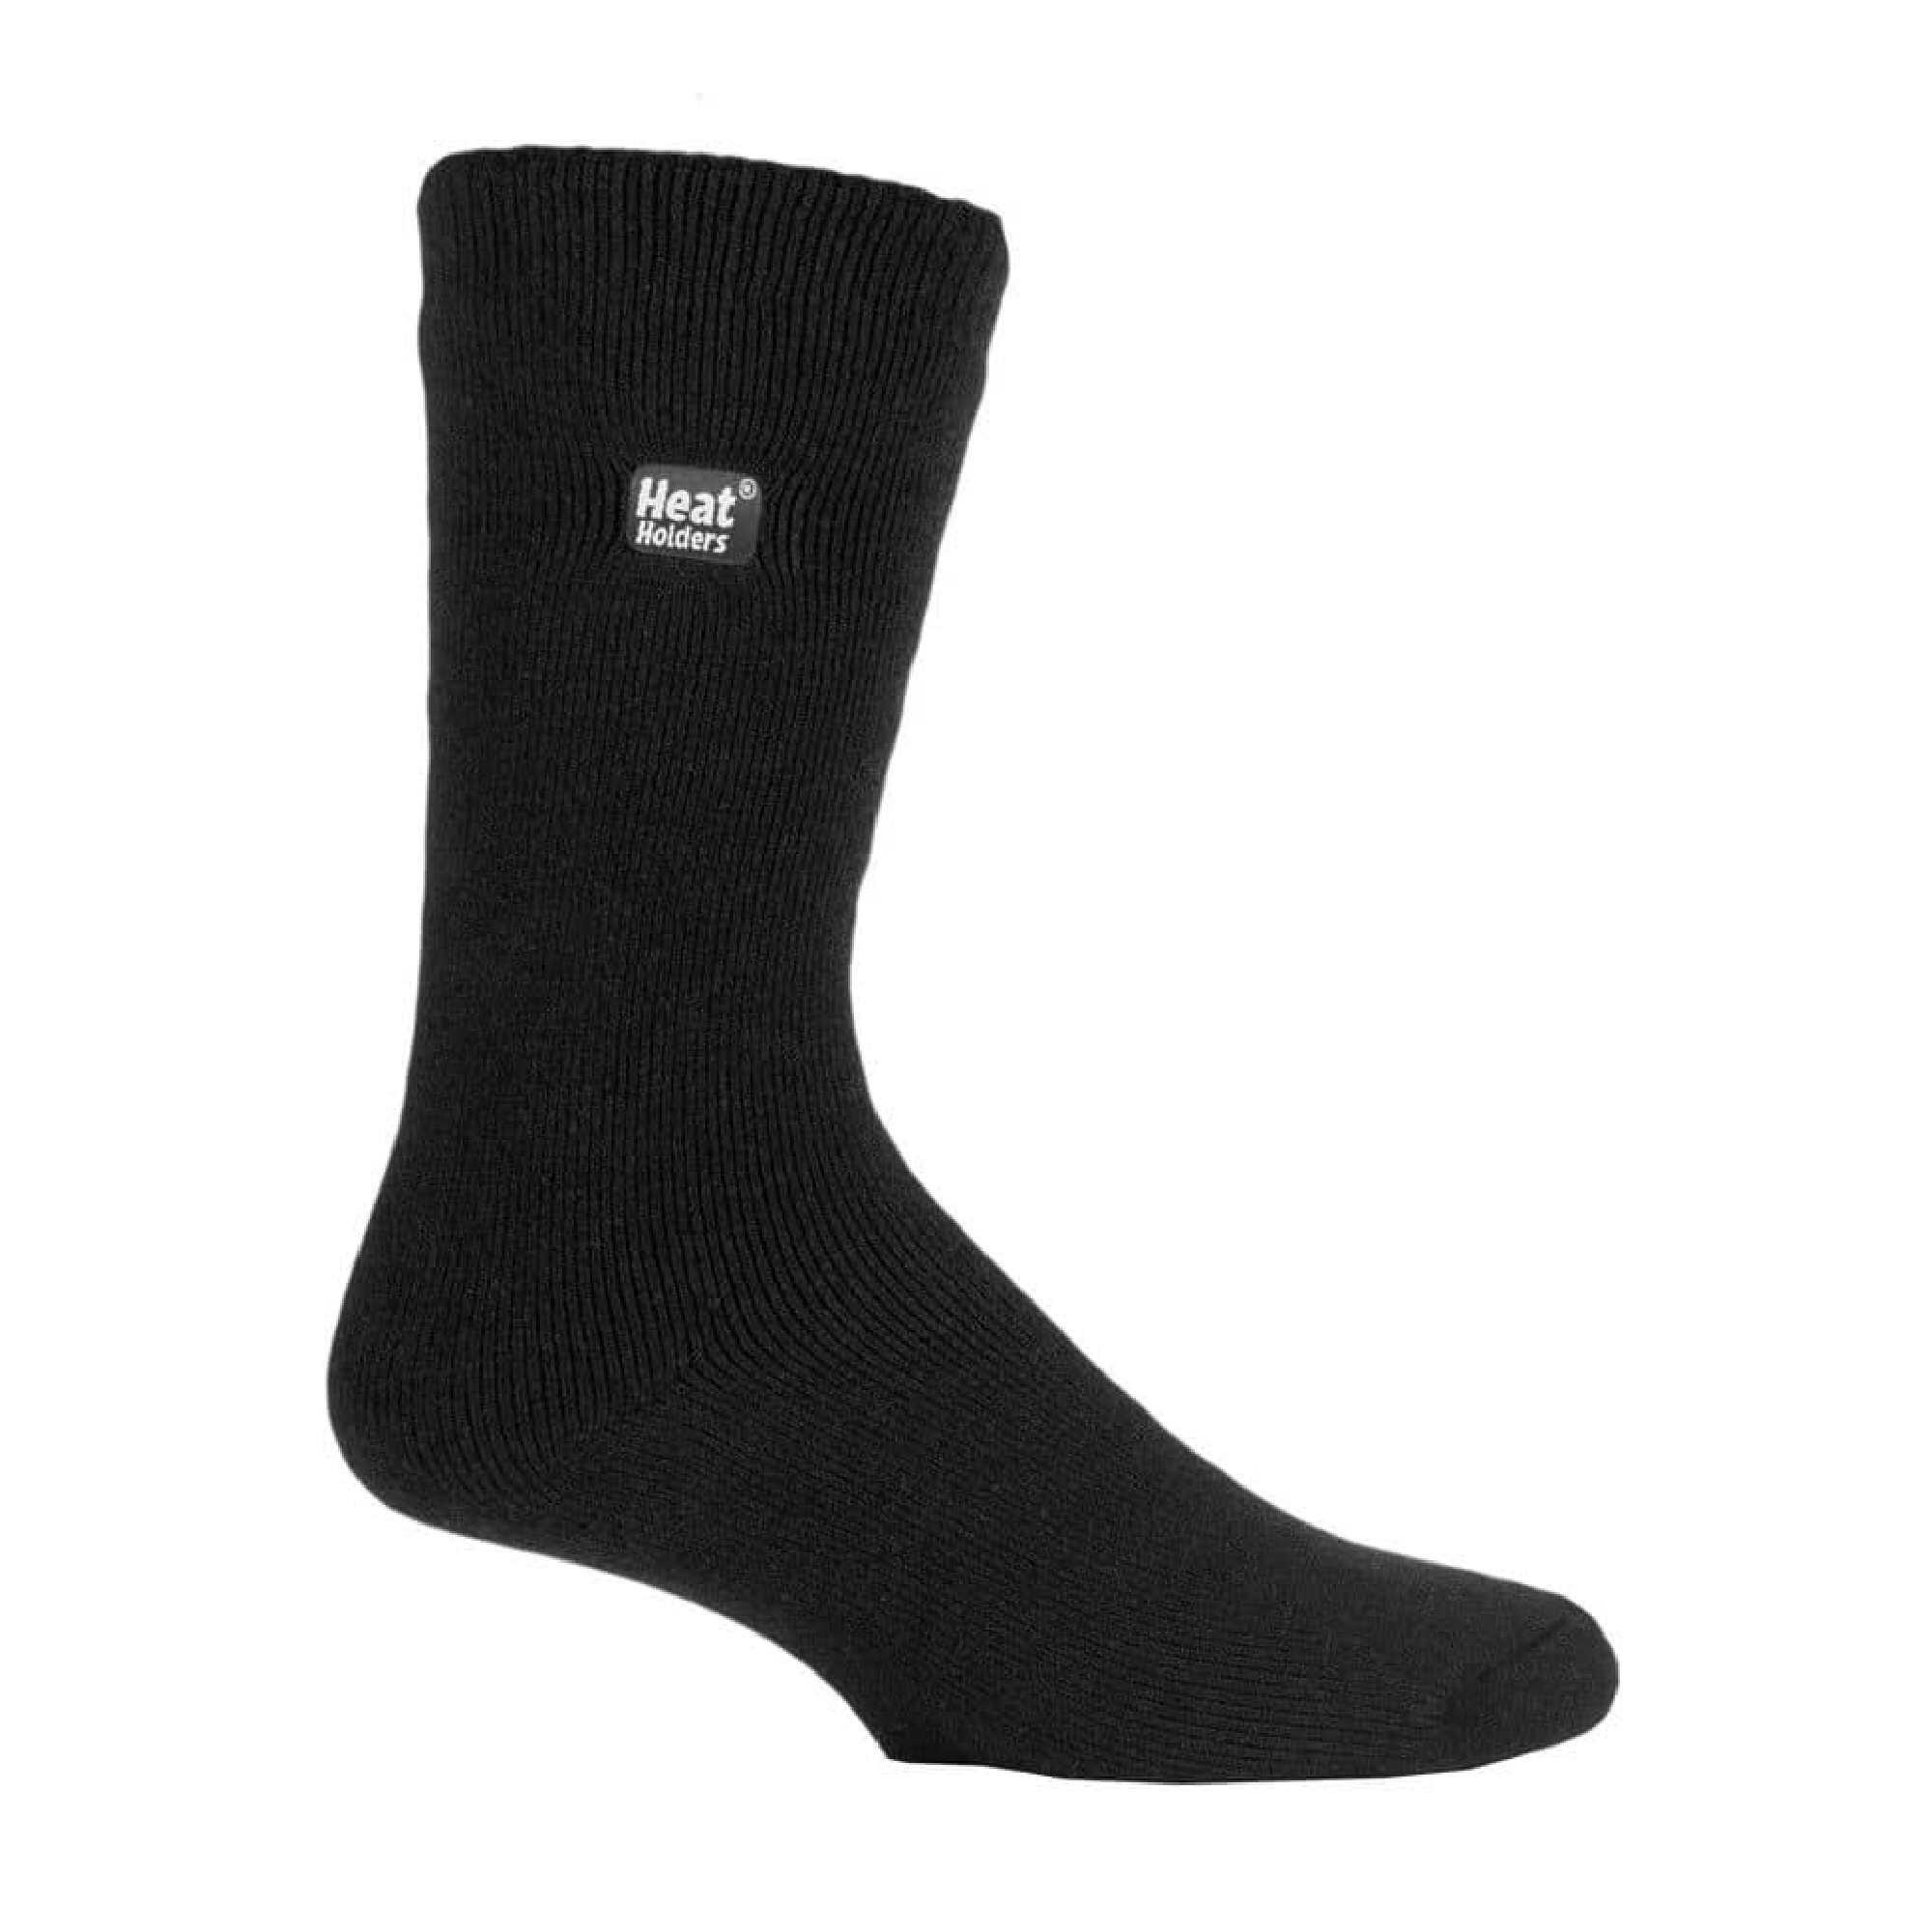 HEAT HOLDERS Mens Plain Colour 1.0 TOG Lightweight Casual Thermal Dress Socks